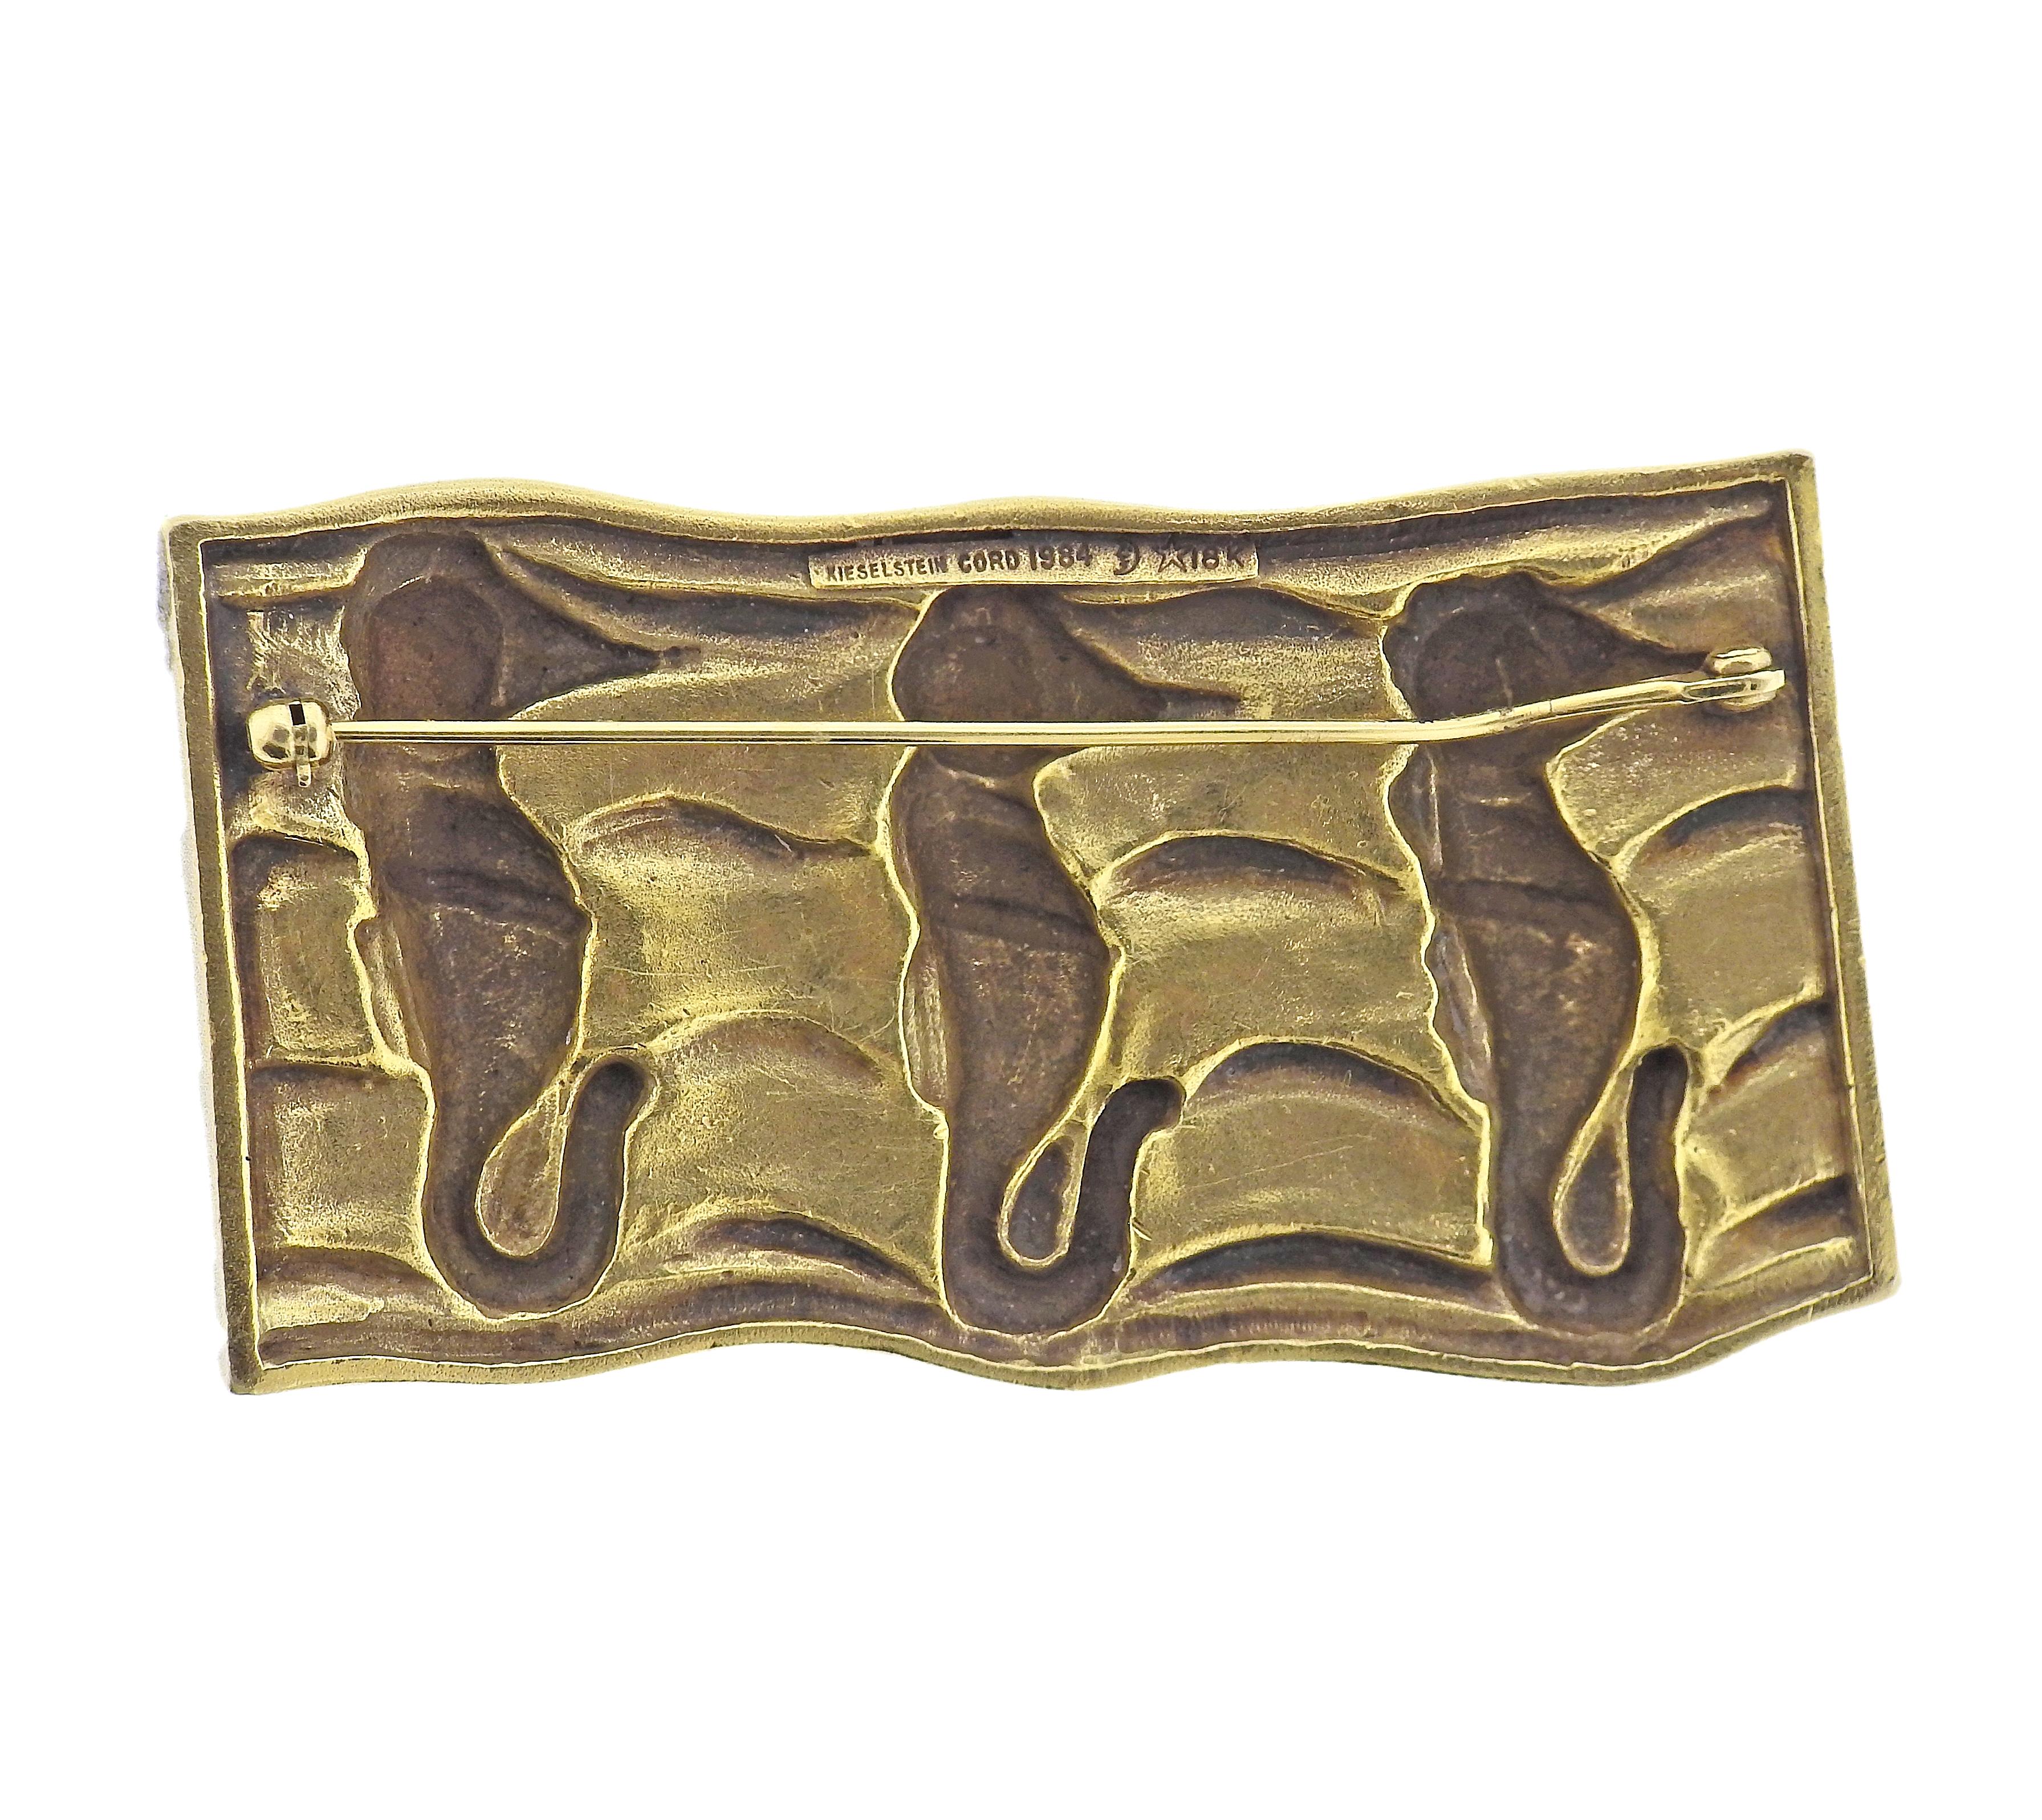 Circa 1984, 18k gold brooch by Barry Kieselstein-Cord, depicting three seahorses. Brooch measures 2.5